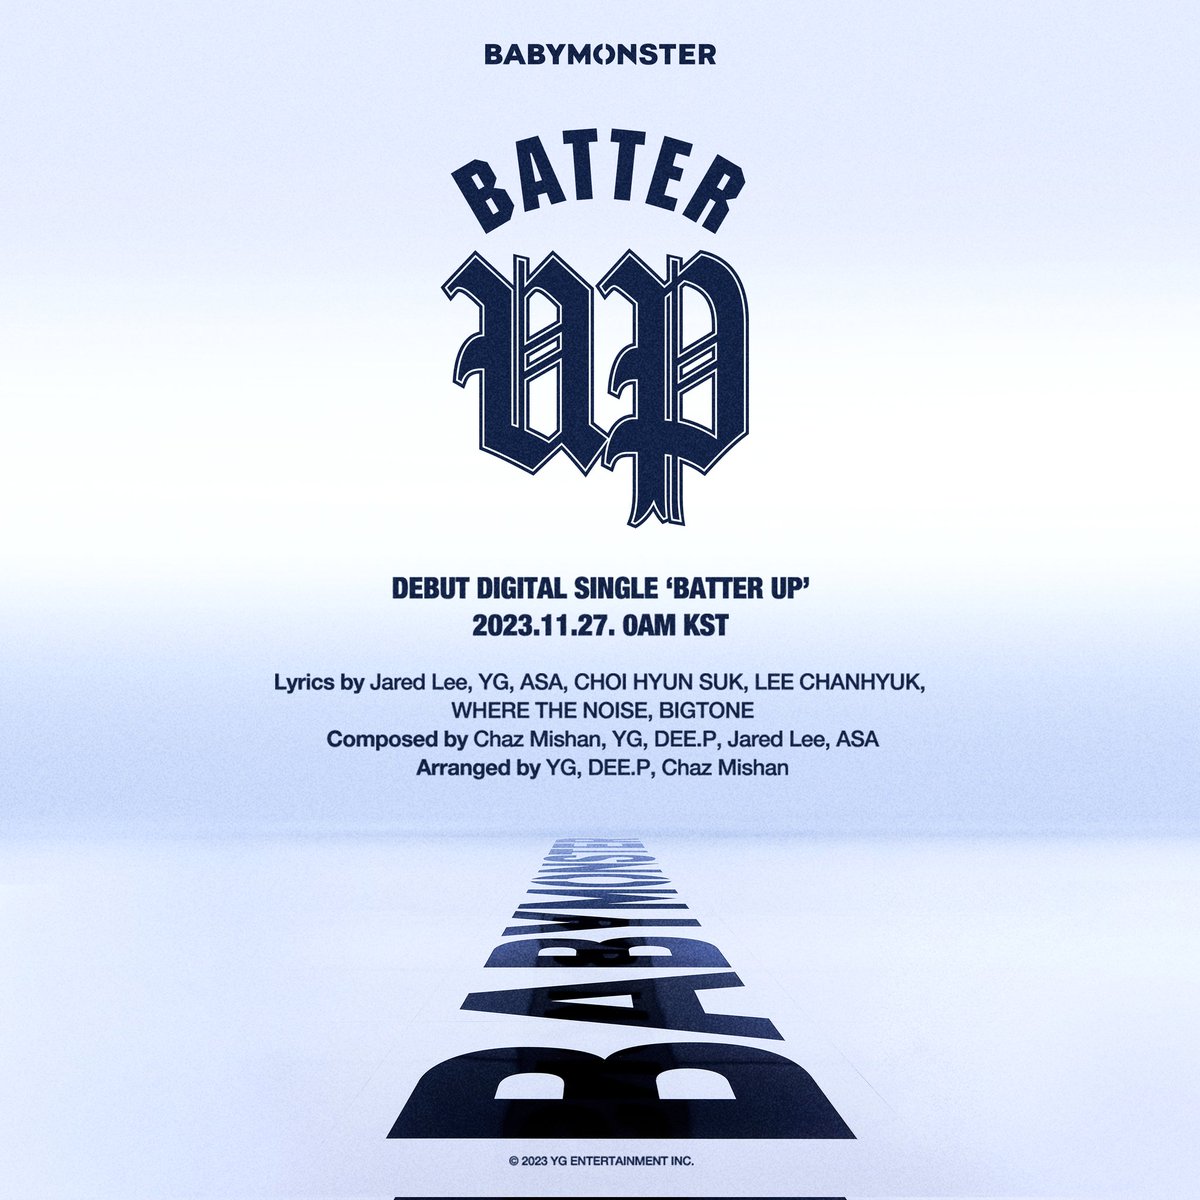 #BABYMONSTER 'BATTER UP' CREDIT

BABYMONSTER Debut Digital Single [BATTER UP]
✅2023.11.27 0AM (KST)

#베이비몬스터 #DigitalSingle #BATTER_UP #CreditPoster #20231127_0AM #YG